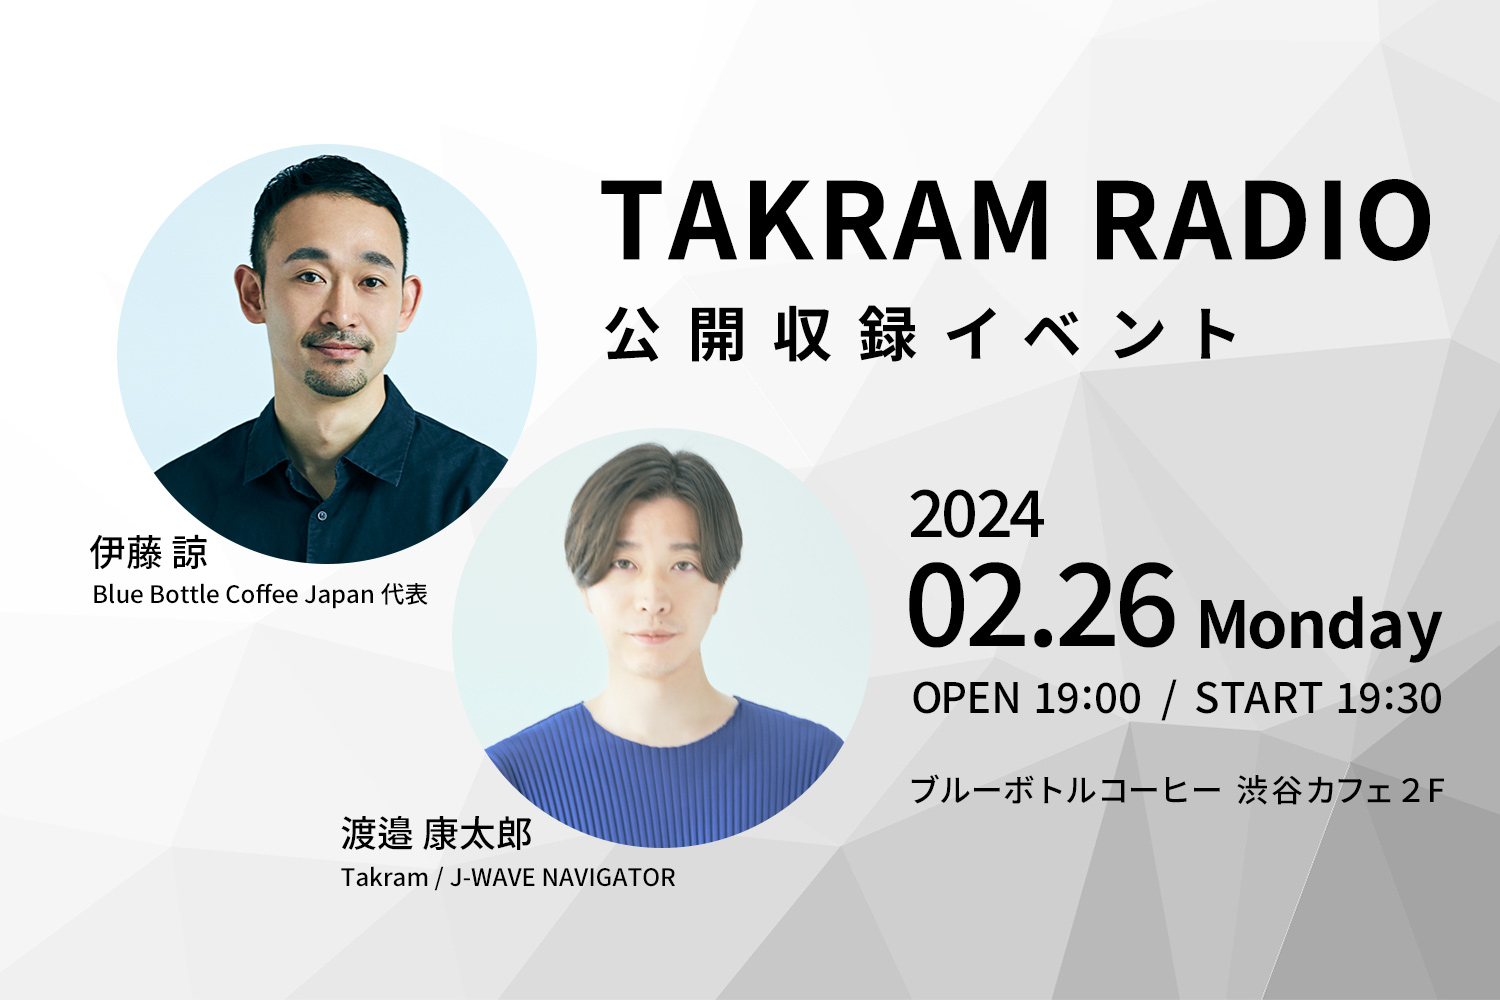 Blue Bottle Coffee Japan 代表の伊藤 諒さんを迎えてTAKRAM RADIOの公開収録を開催